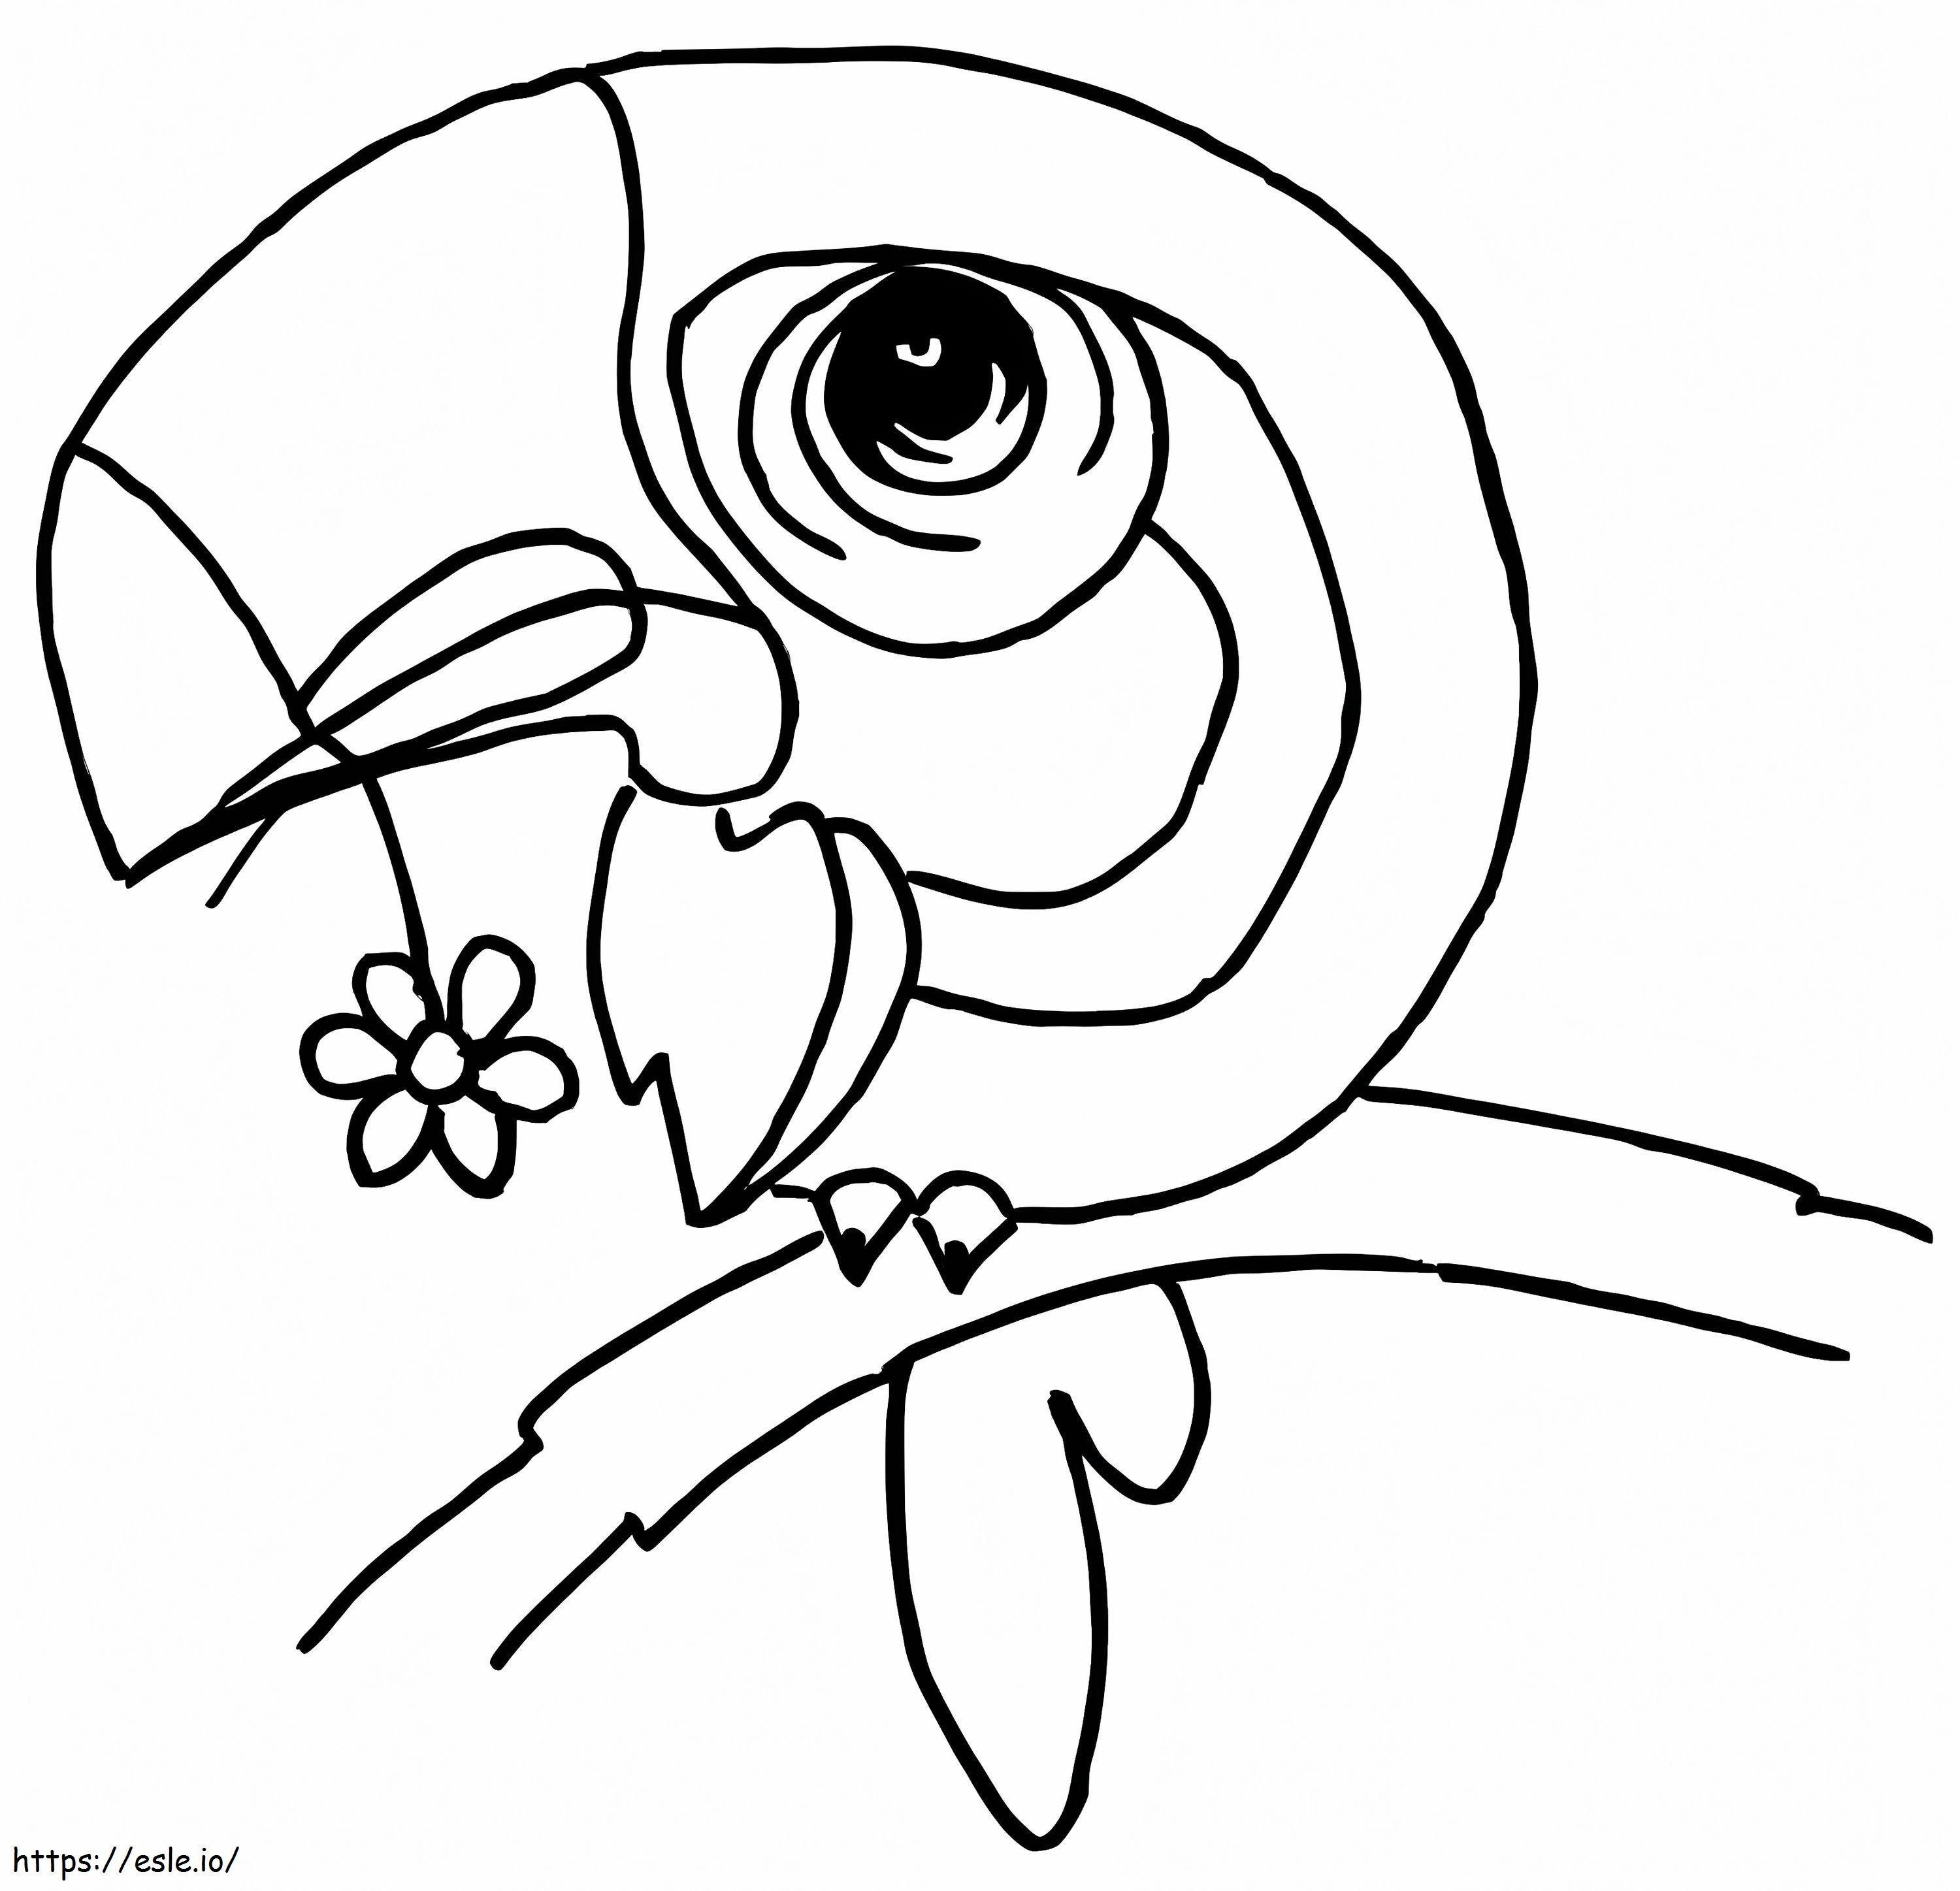 Cartoon Toucan coloring page